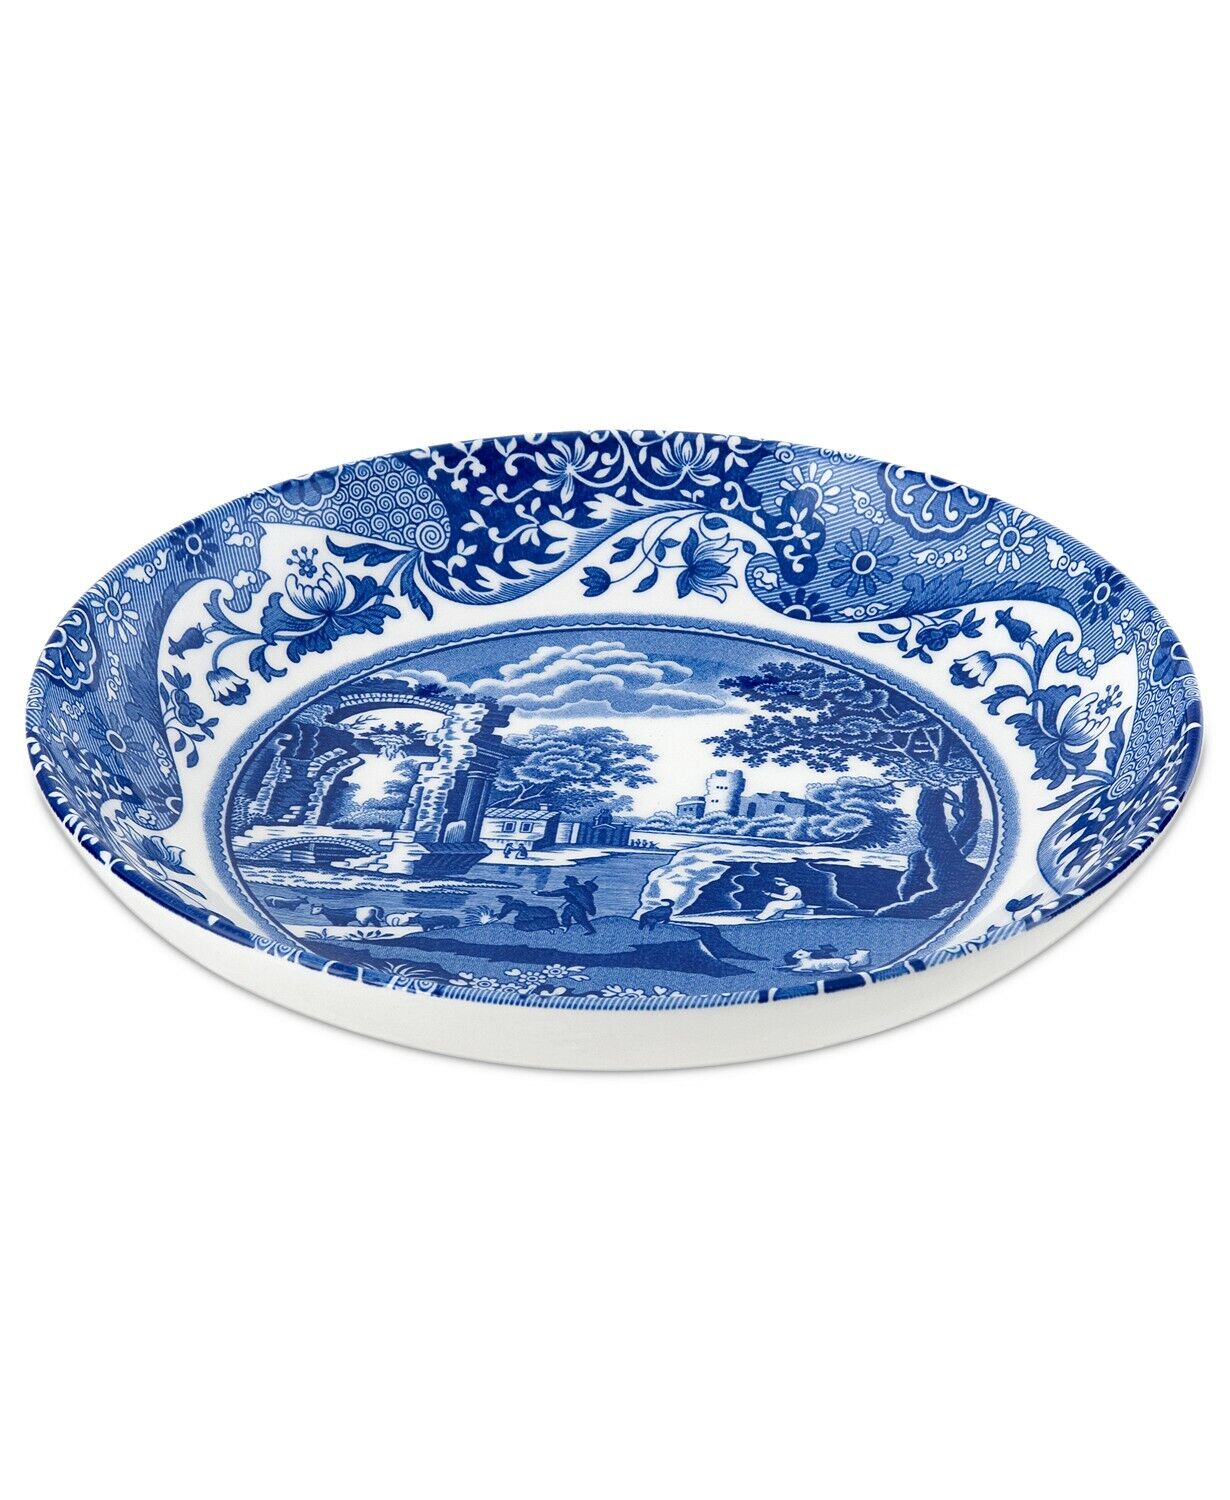 Spode Blue Italian Fine Earthenware Pasta Serving Bowl, 9 Inch - Blue/White